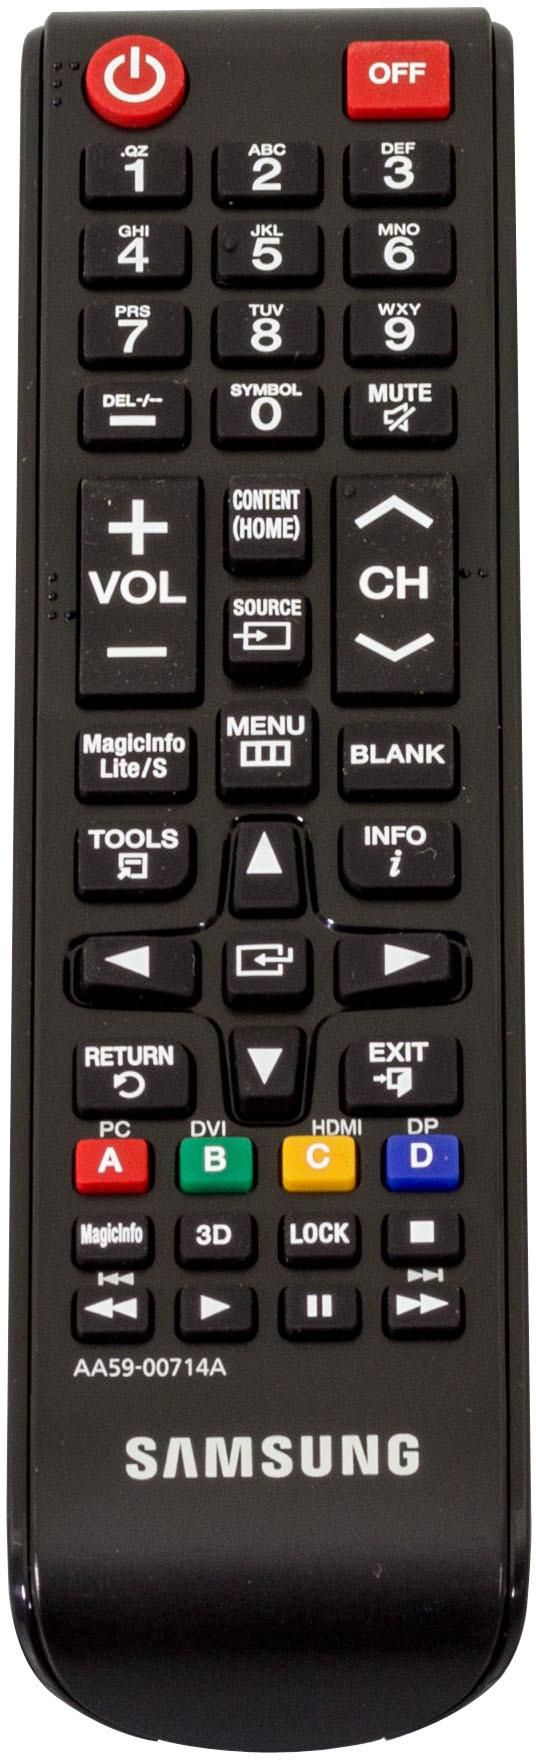 Samsung AA59-00714A Remote Control TM1240 